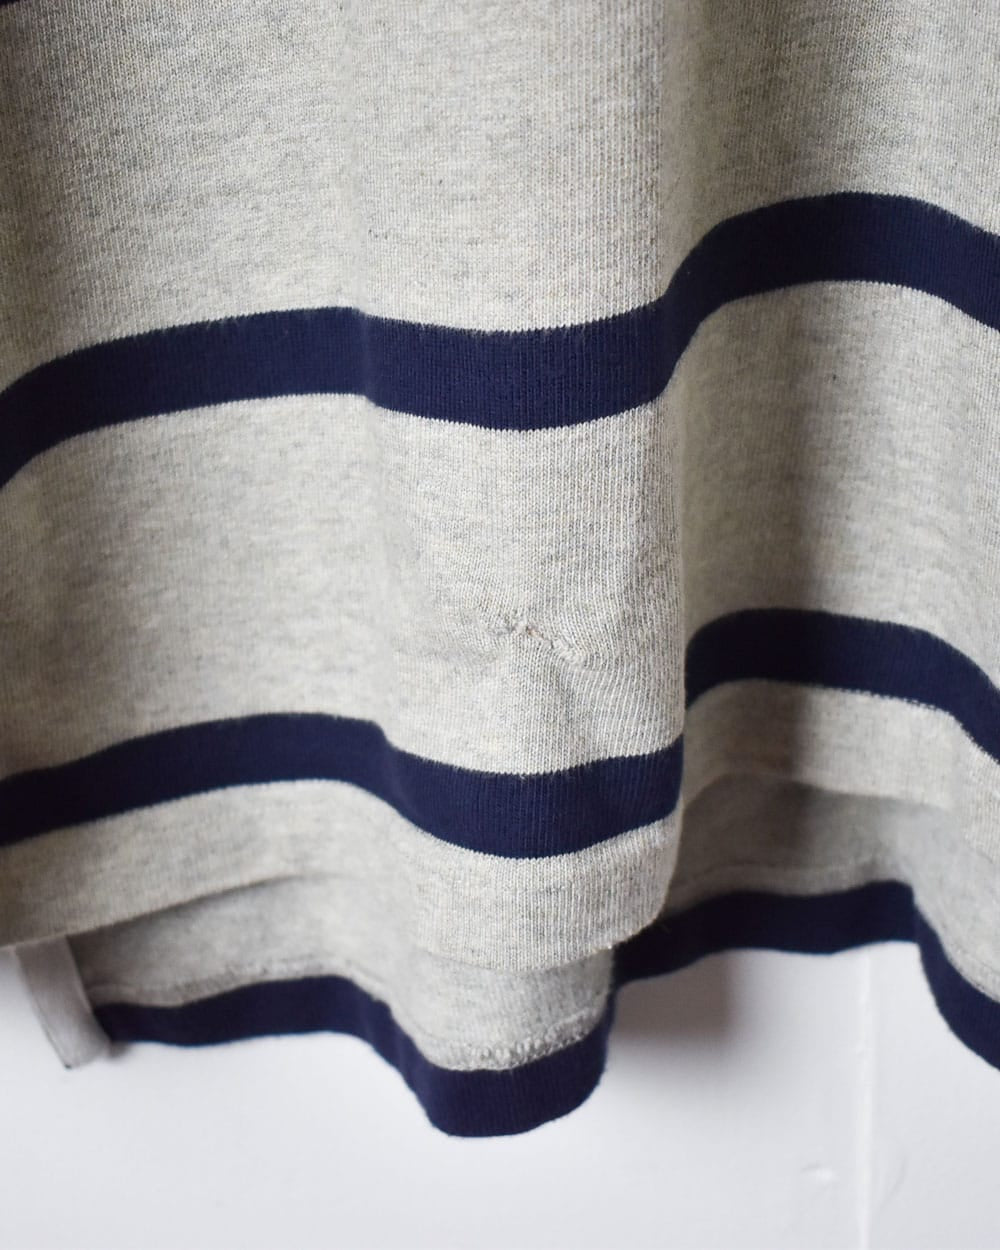 Stone Polo Ralph Lauren Striped Rugby Shirt - Medium